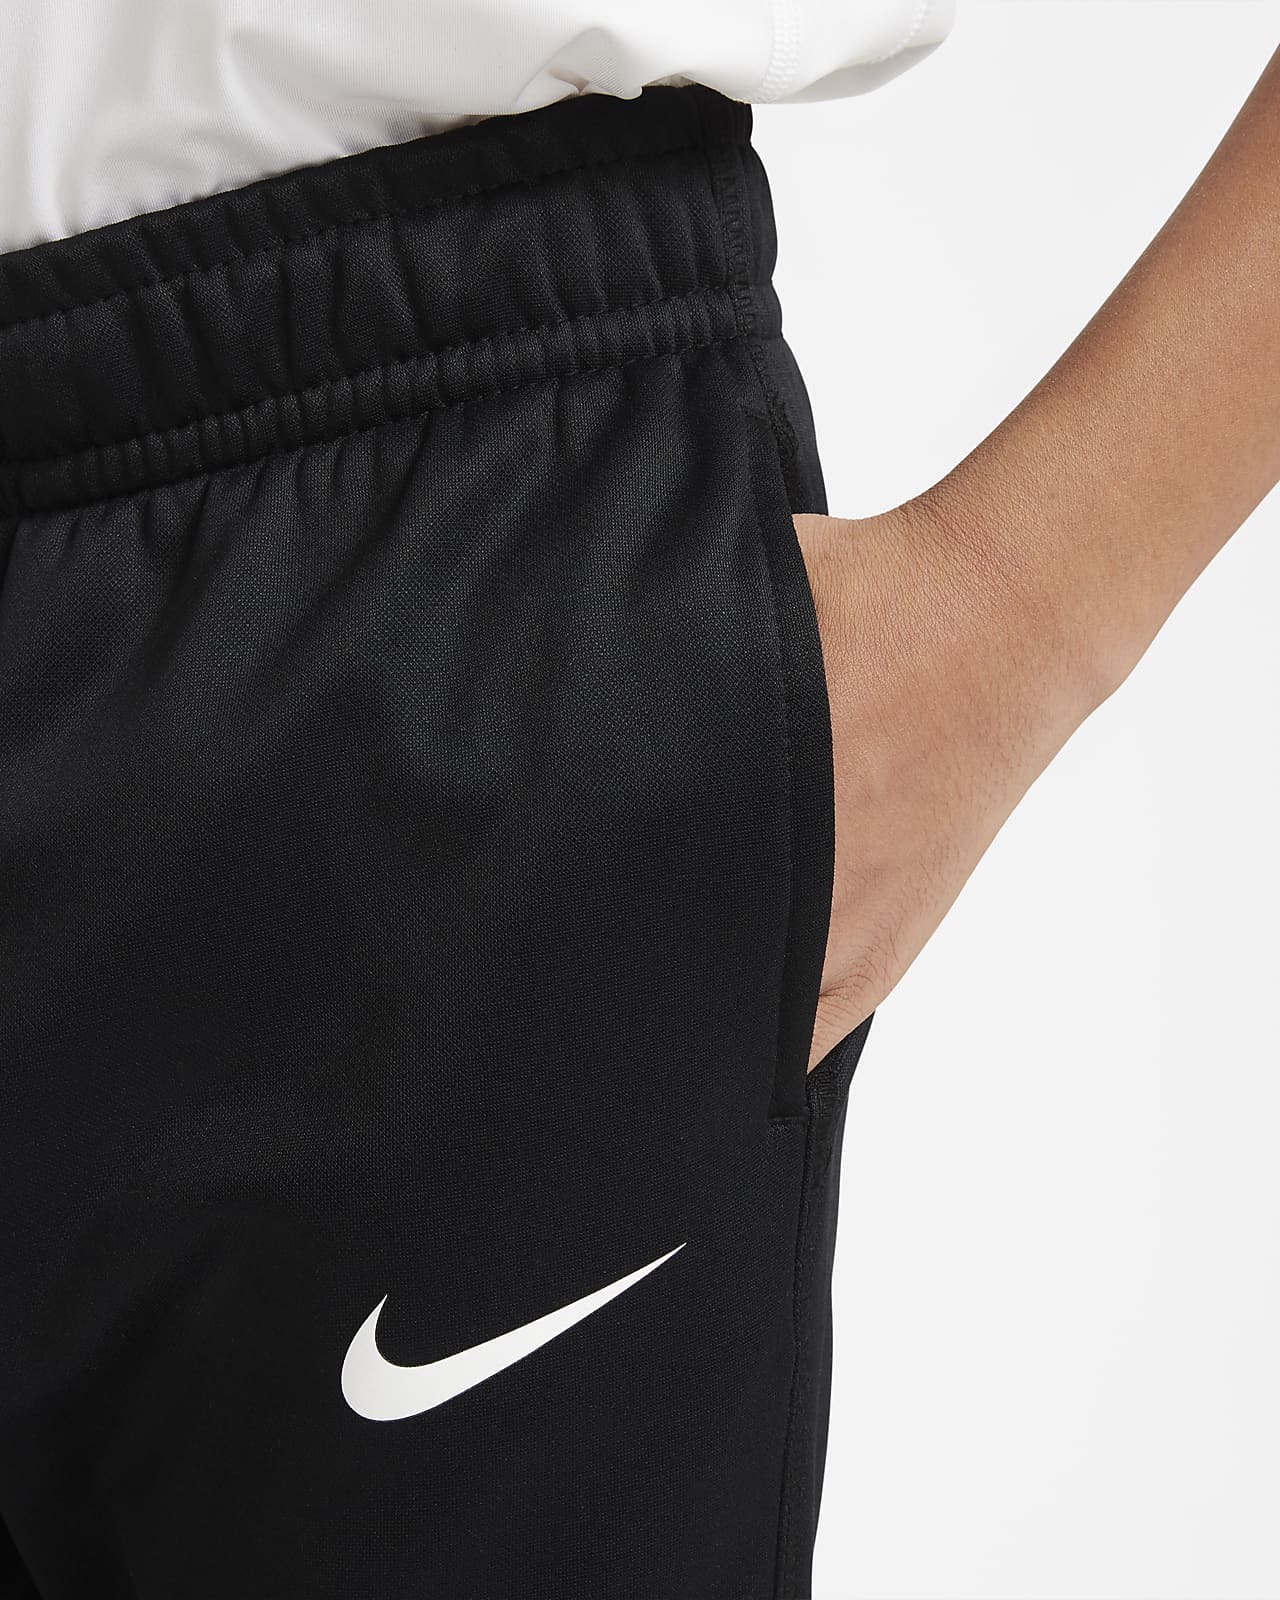 Nike Men THERMA FIT Tapered Pants Gray Athletic Jogger Sweat-pant  932256-063 | eBay